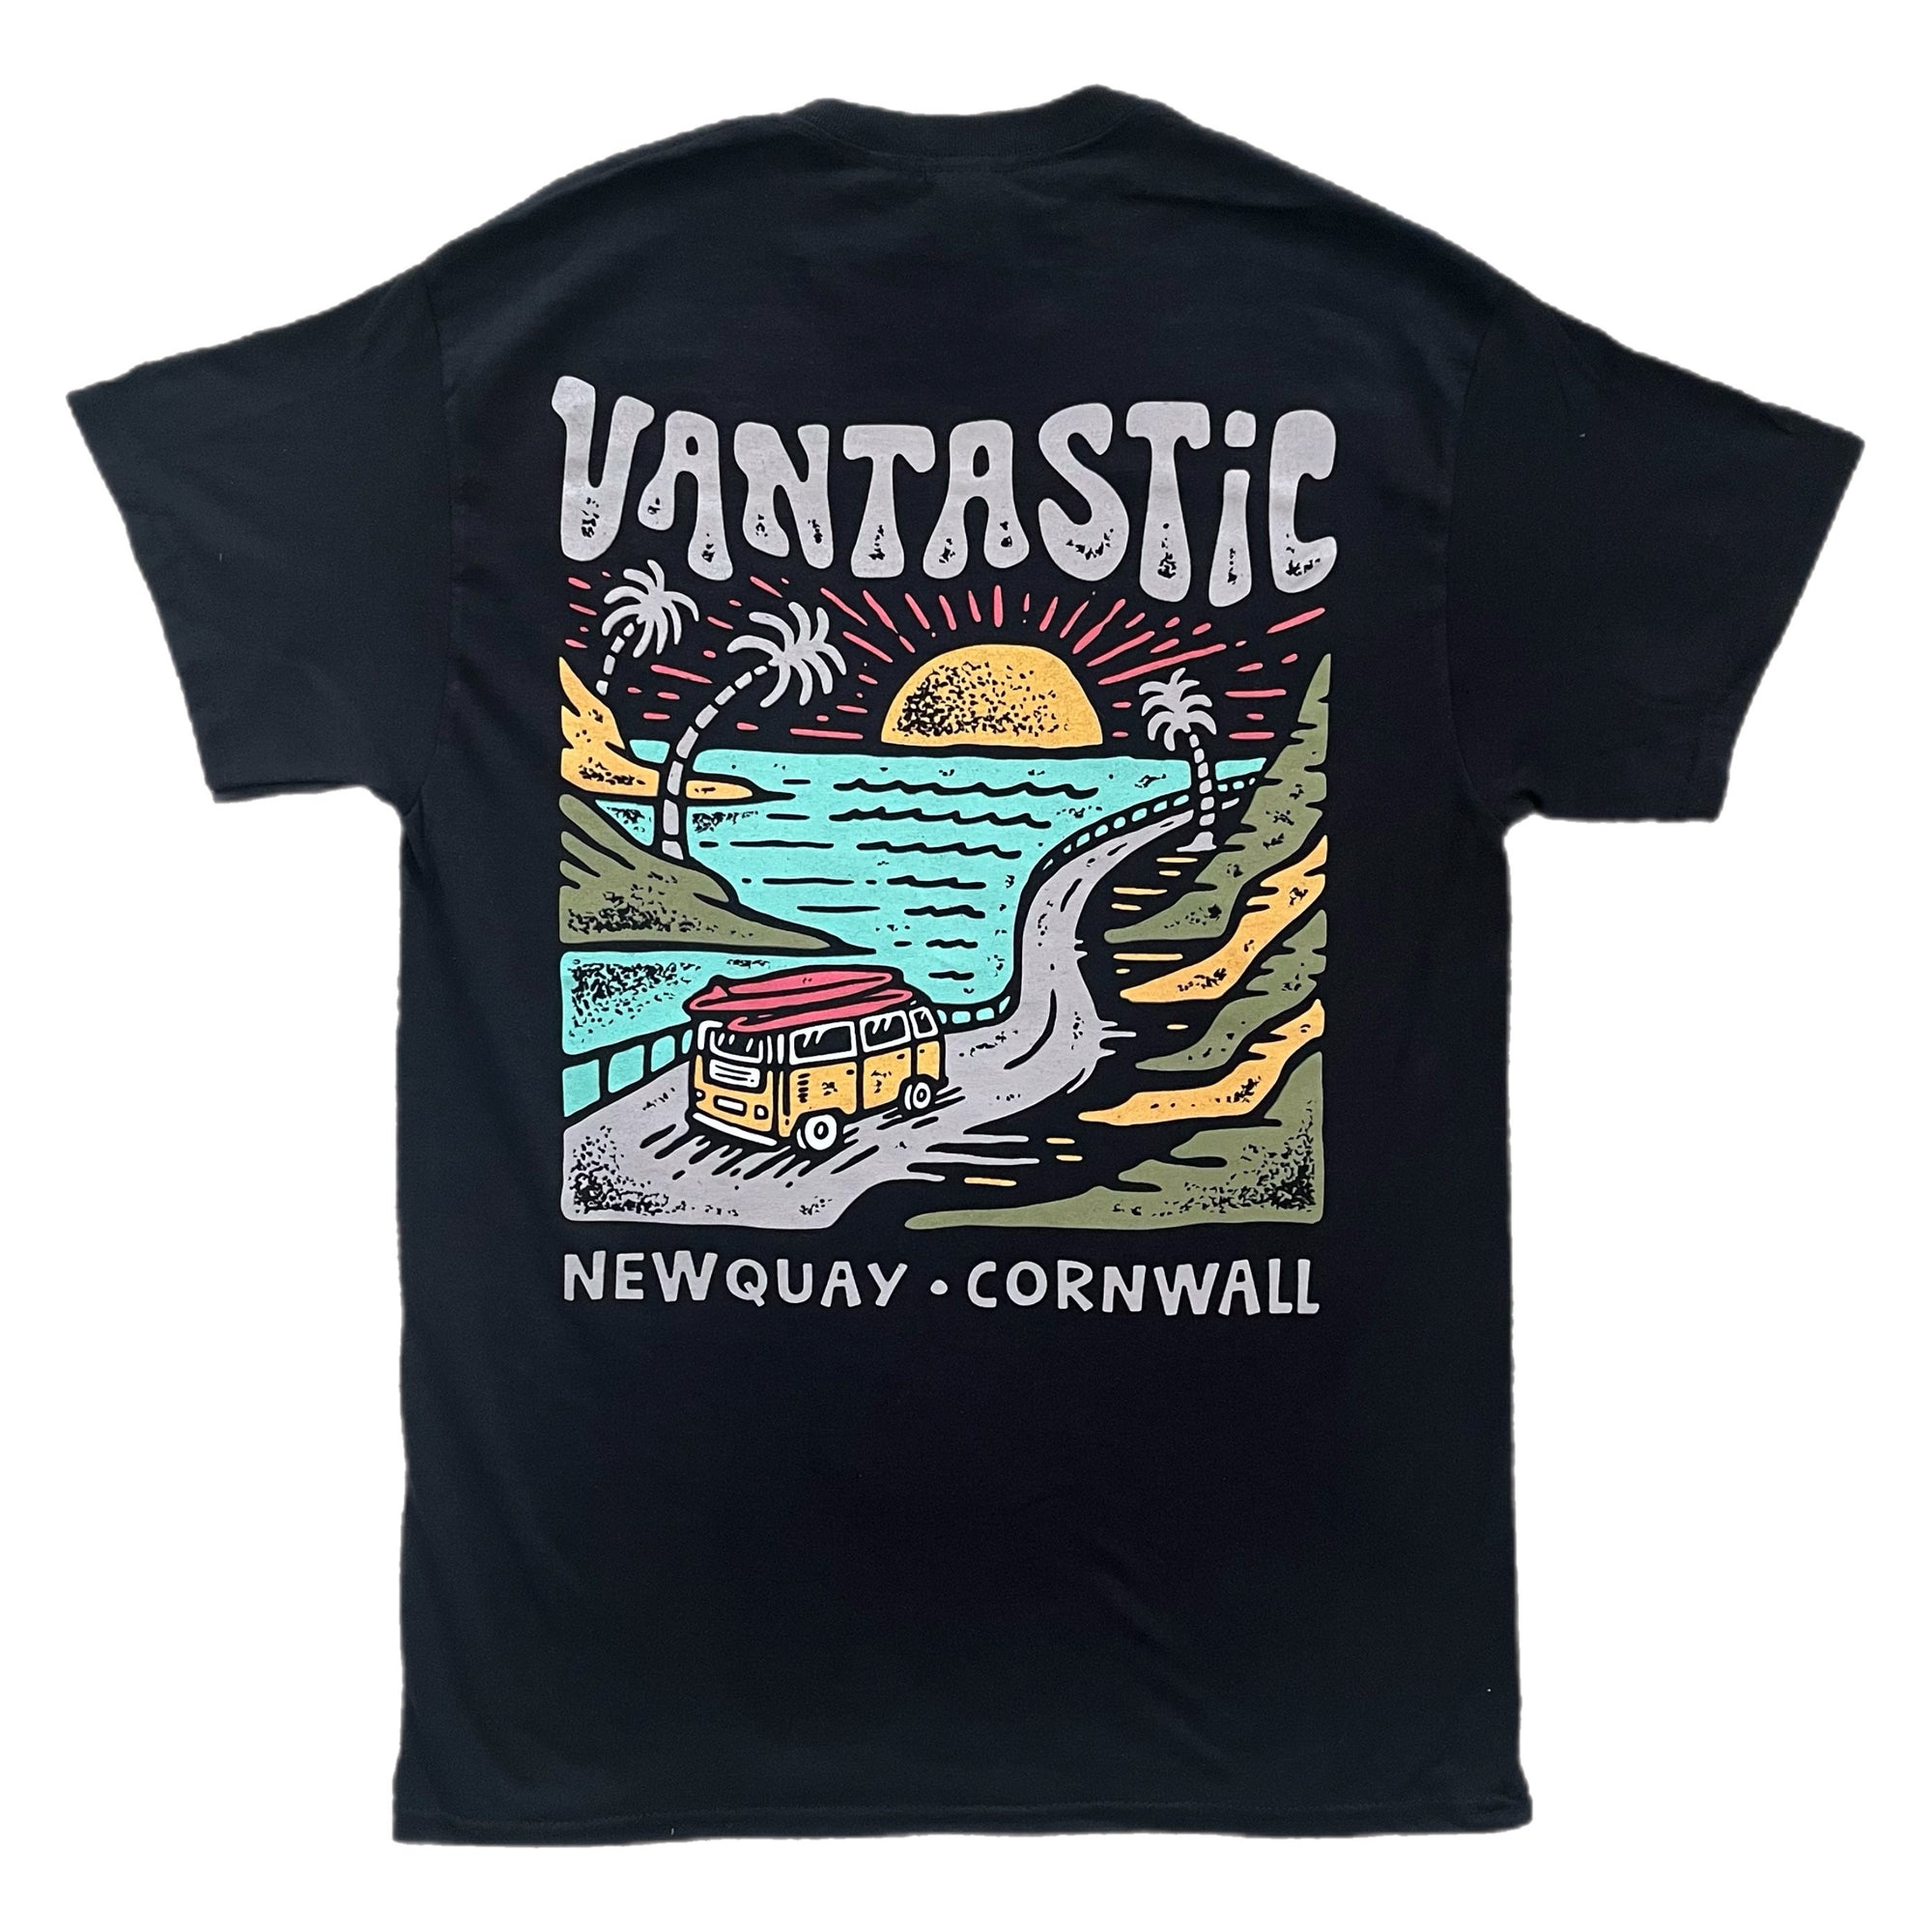 Atlantic coast short sleeve t-shirt - black